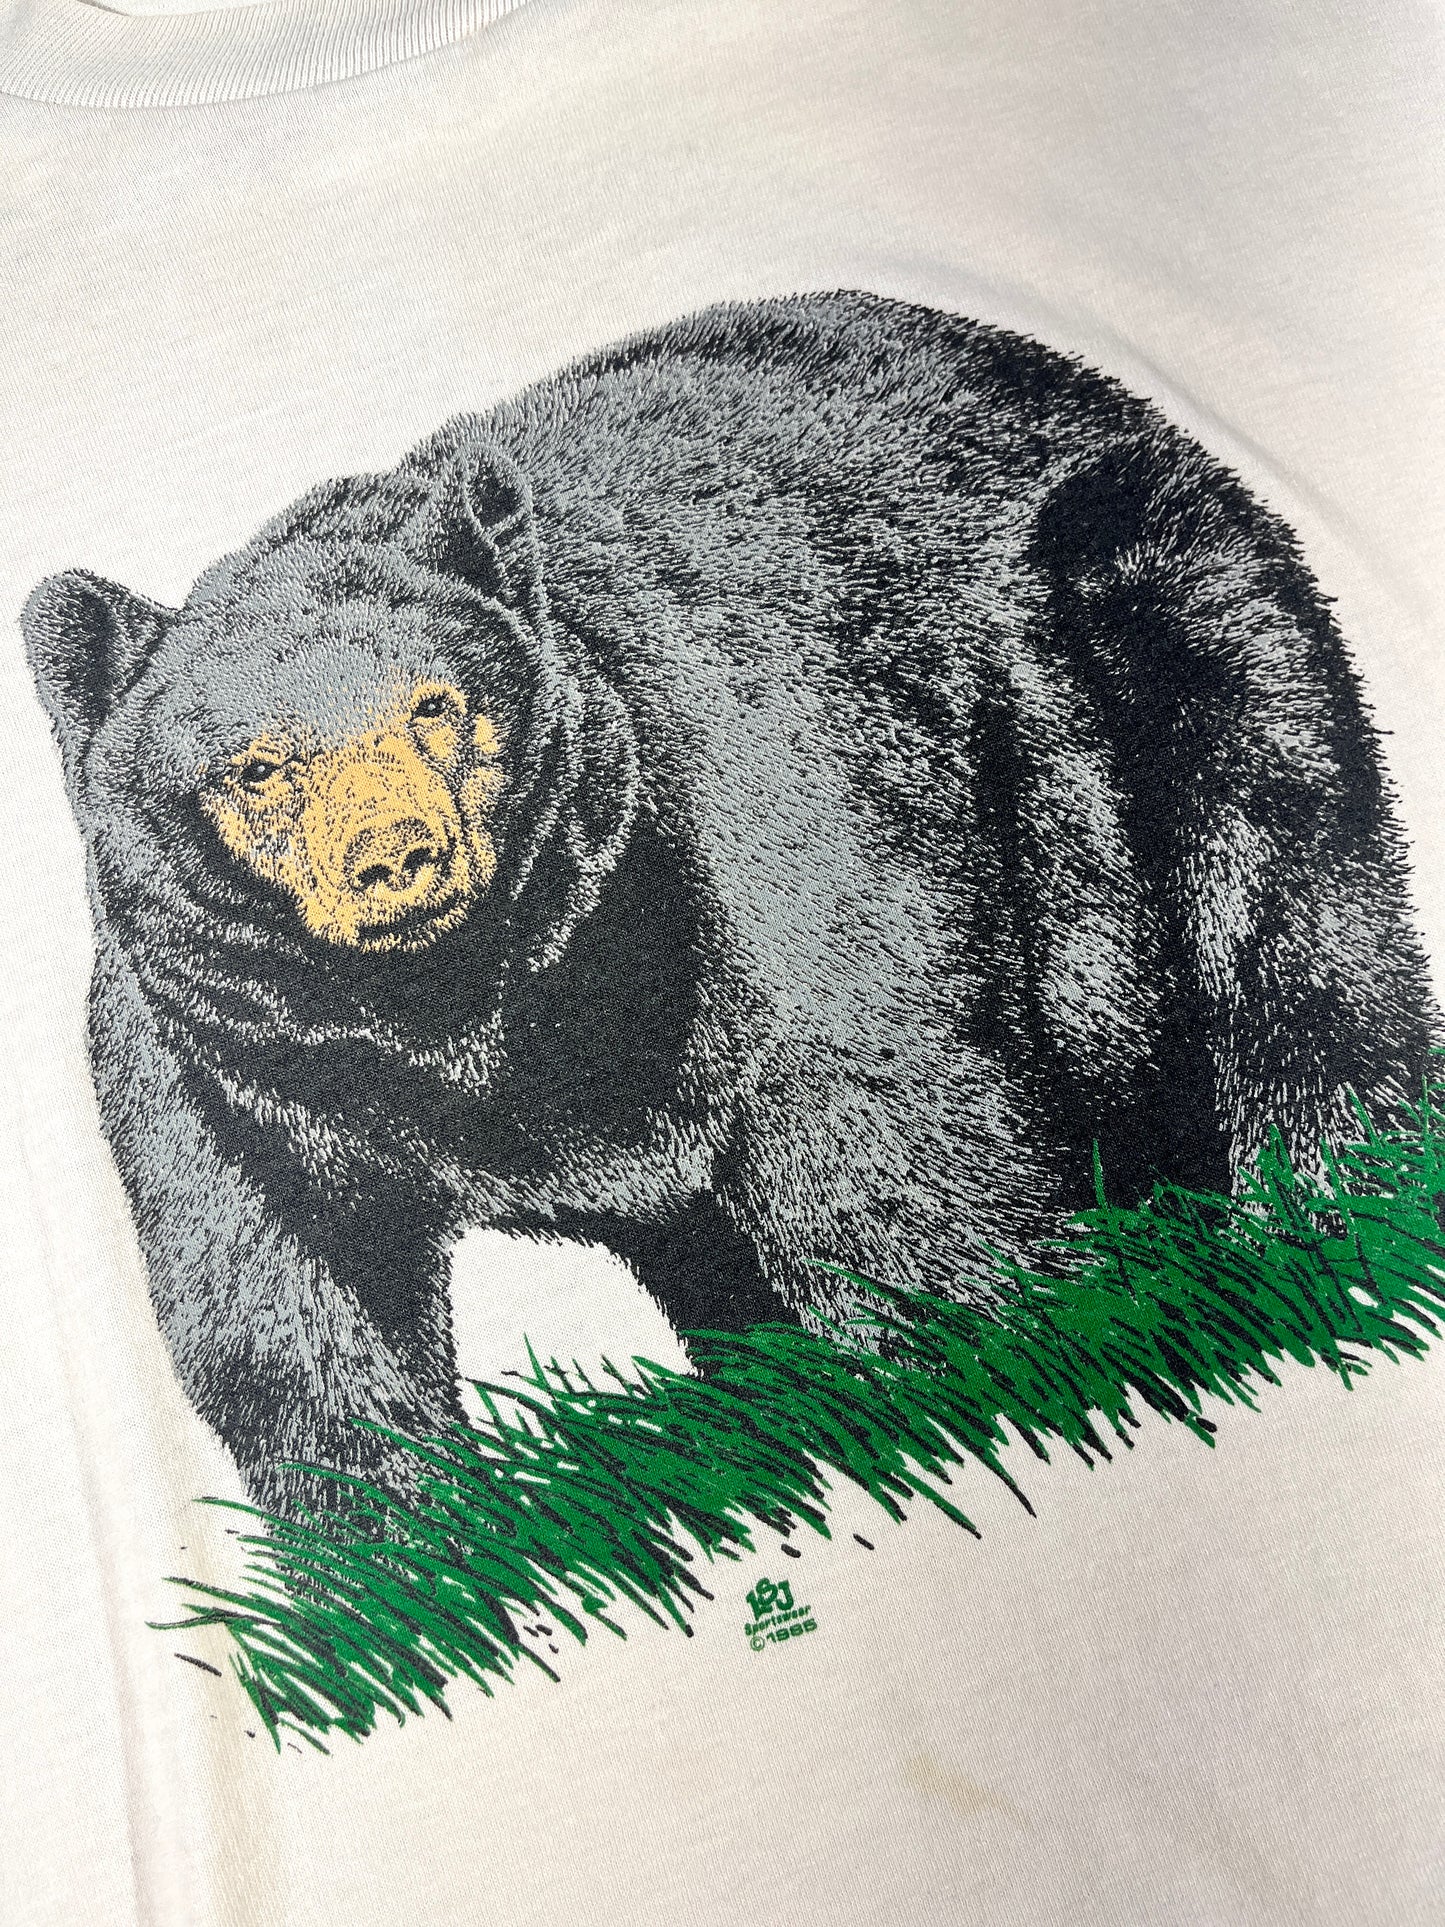 Vintage Bear T-Shirt 90's Single Stitch Animal Black Bear